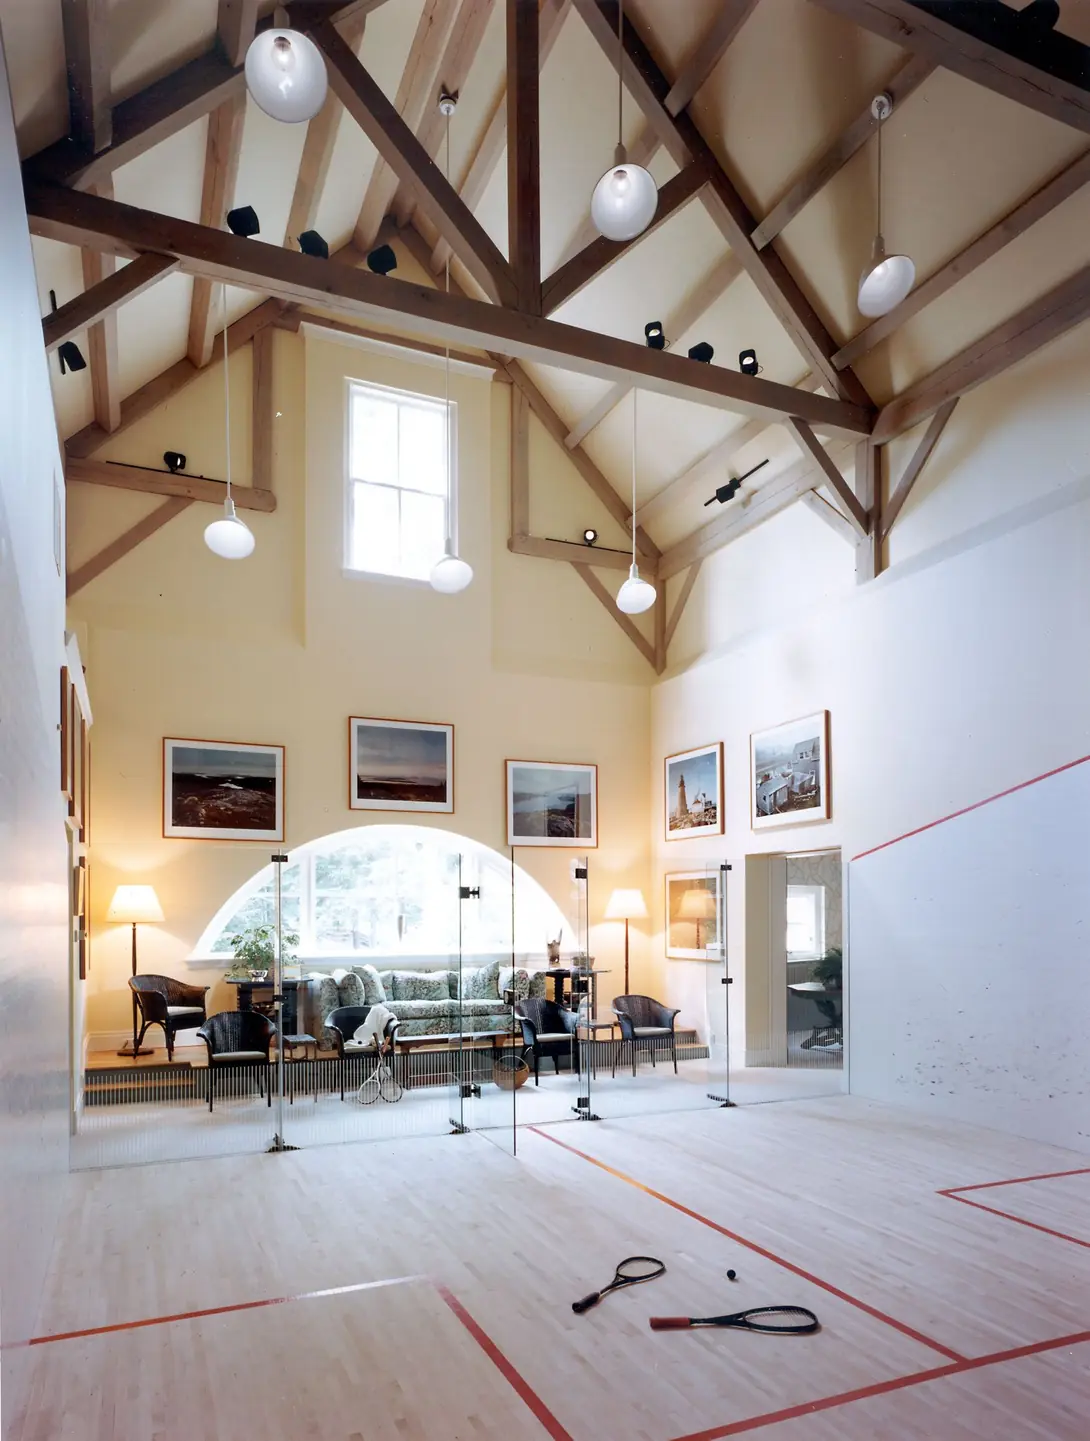 Beautiful Squash Courts – Part 1